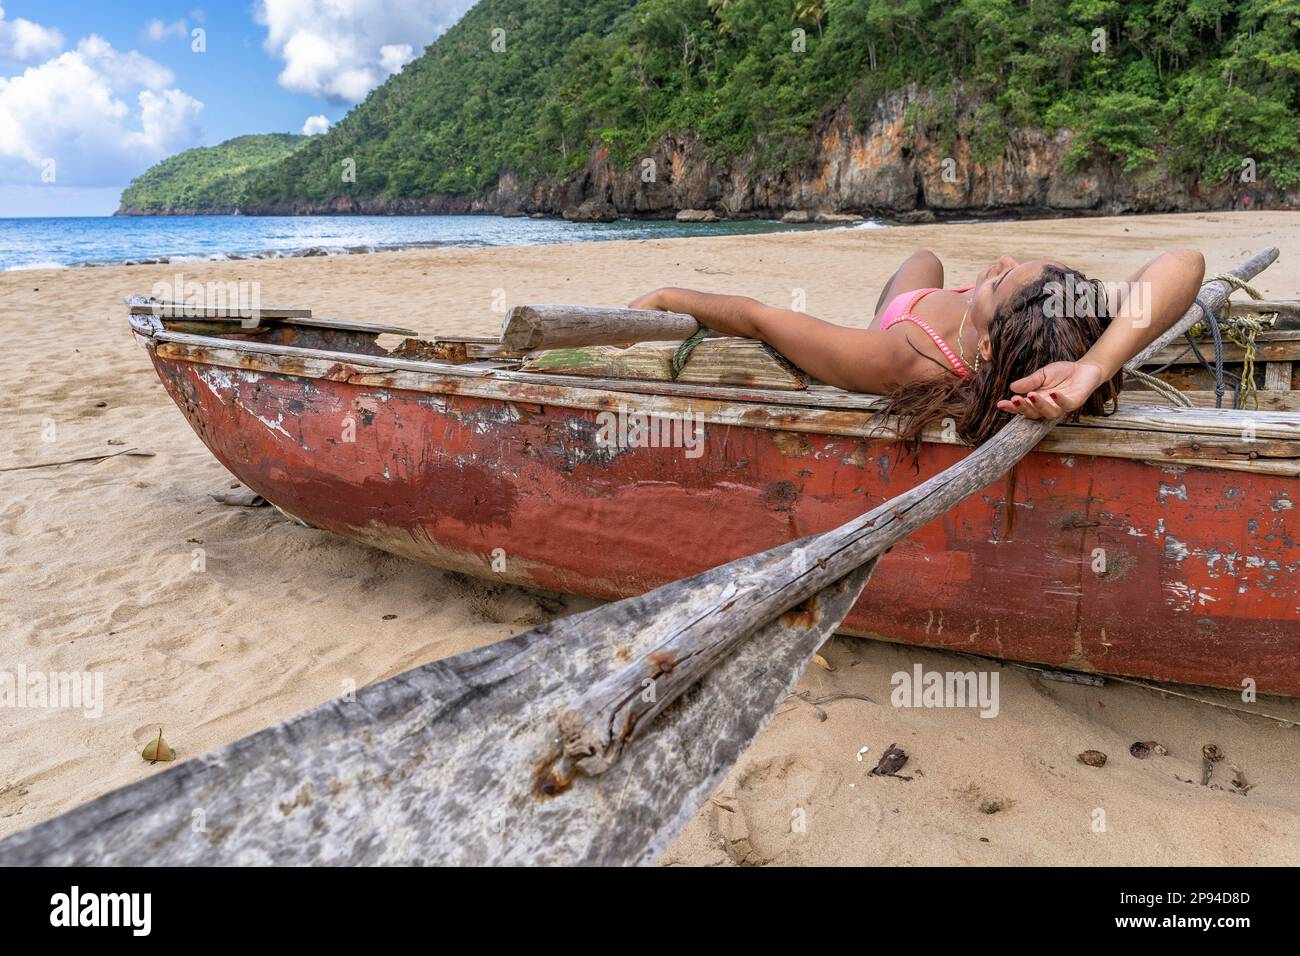 North America, Caribbean, Greater Antilles, Hispaniola Island, Dominican Republic, Sama, Playa El Valle, pretty woman lying in old wooden boat on beach Stock Photo